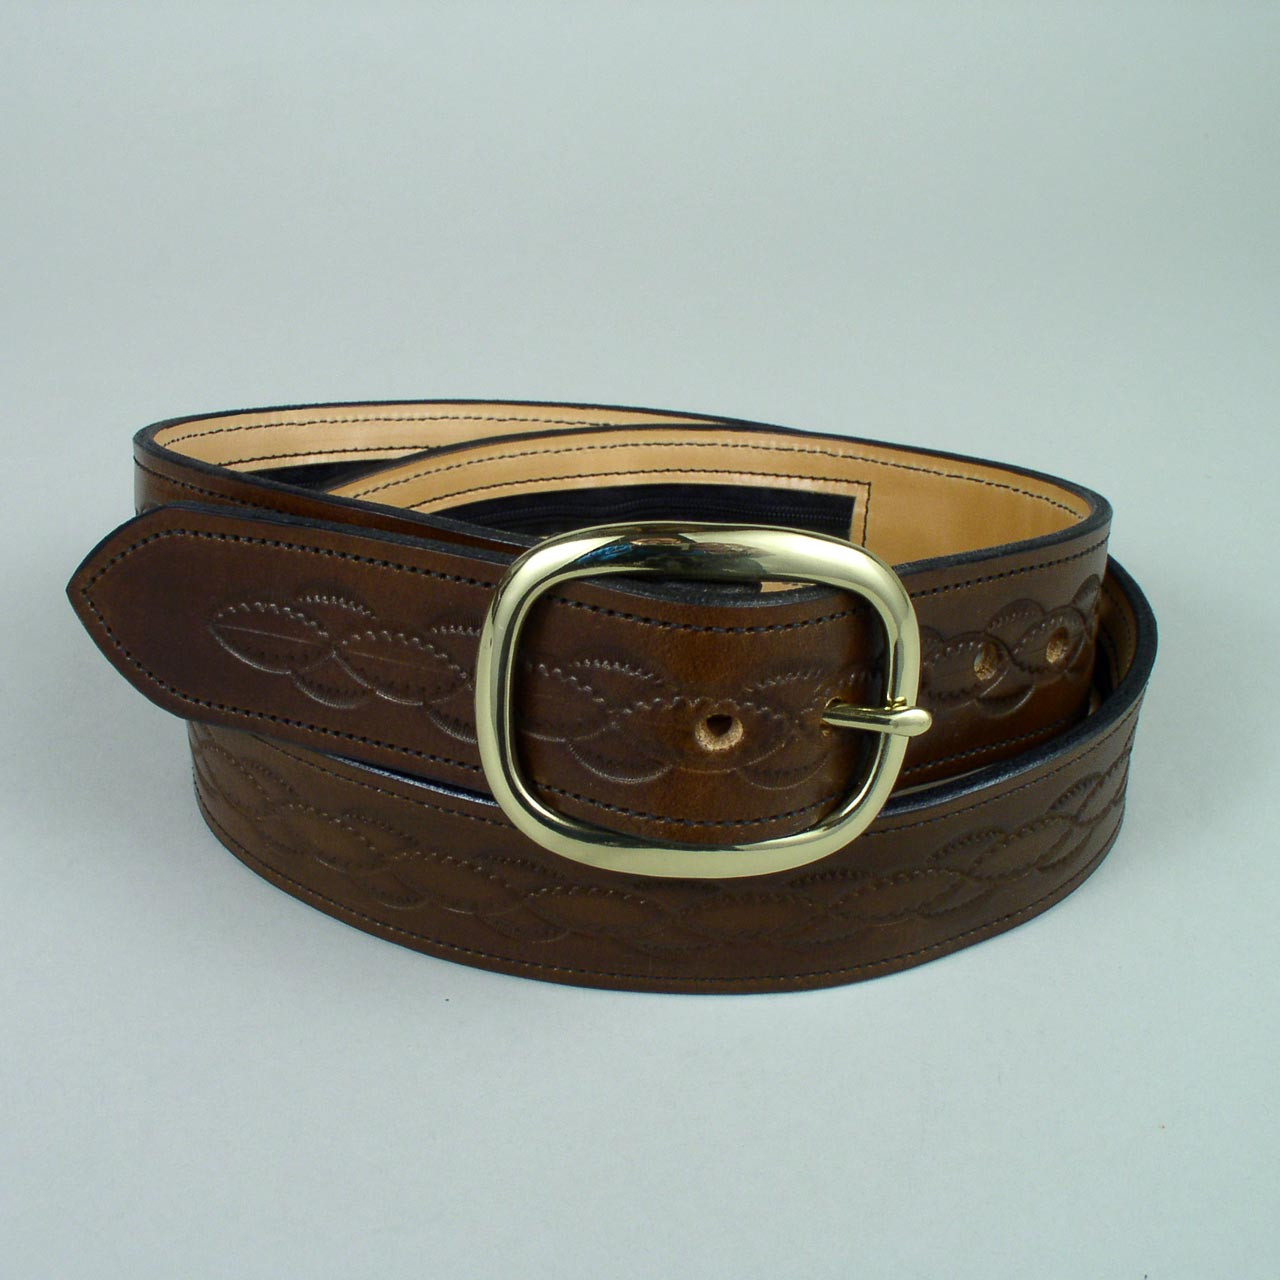 HIDE & SKIN Top Grain Genuine Leather Handmade, Cowboy Belt for Men, 46  inches length